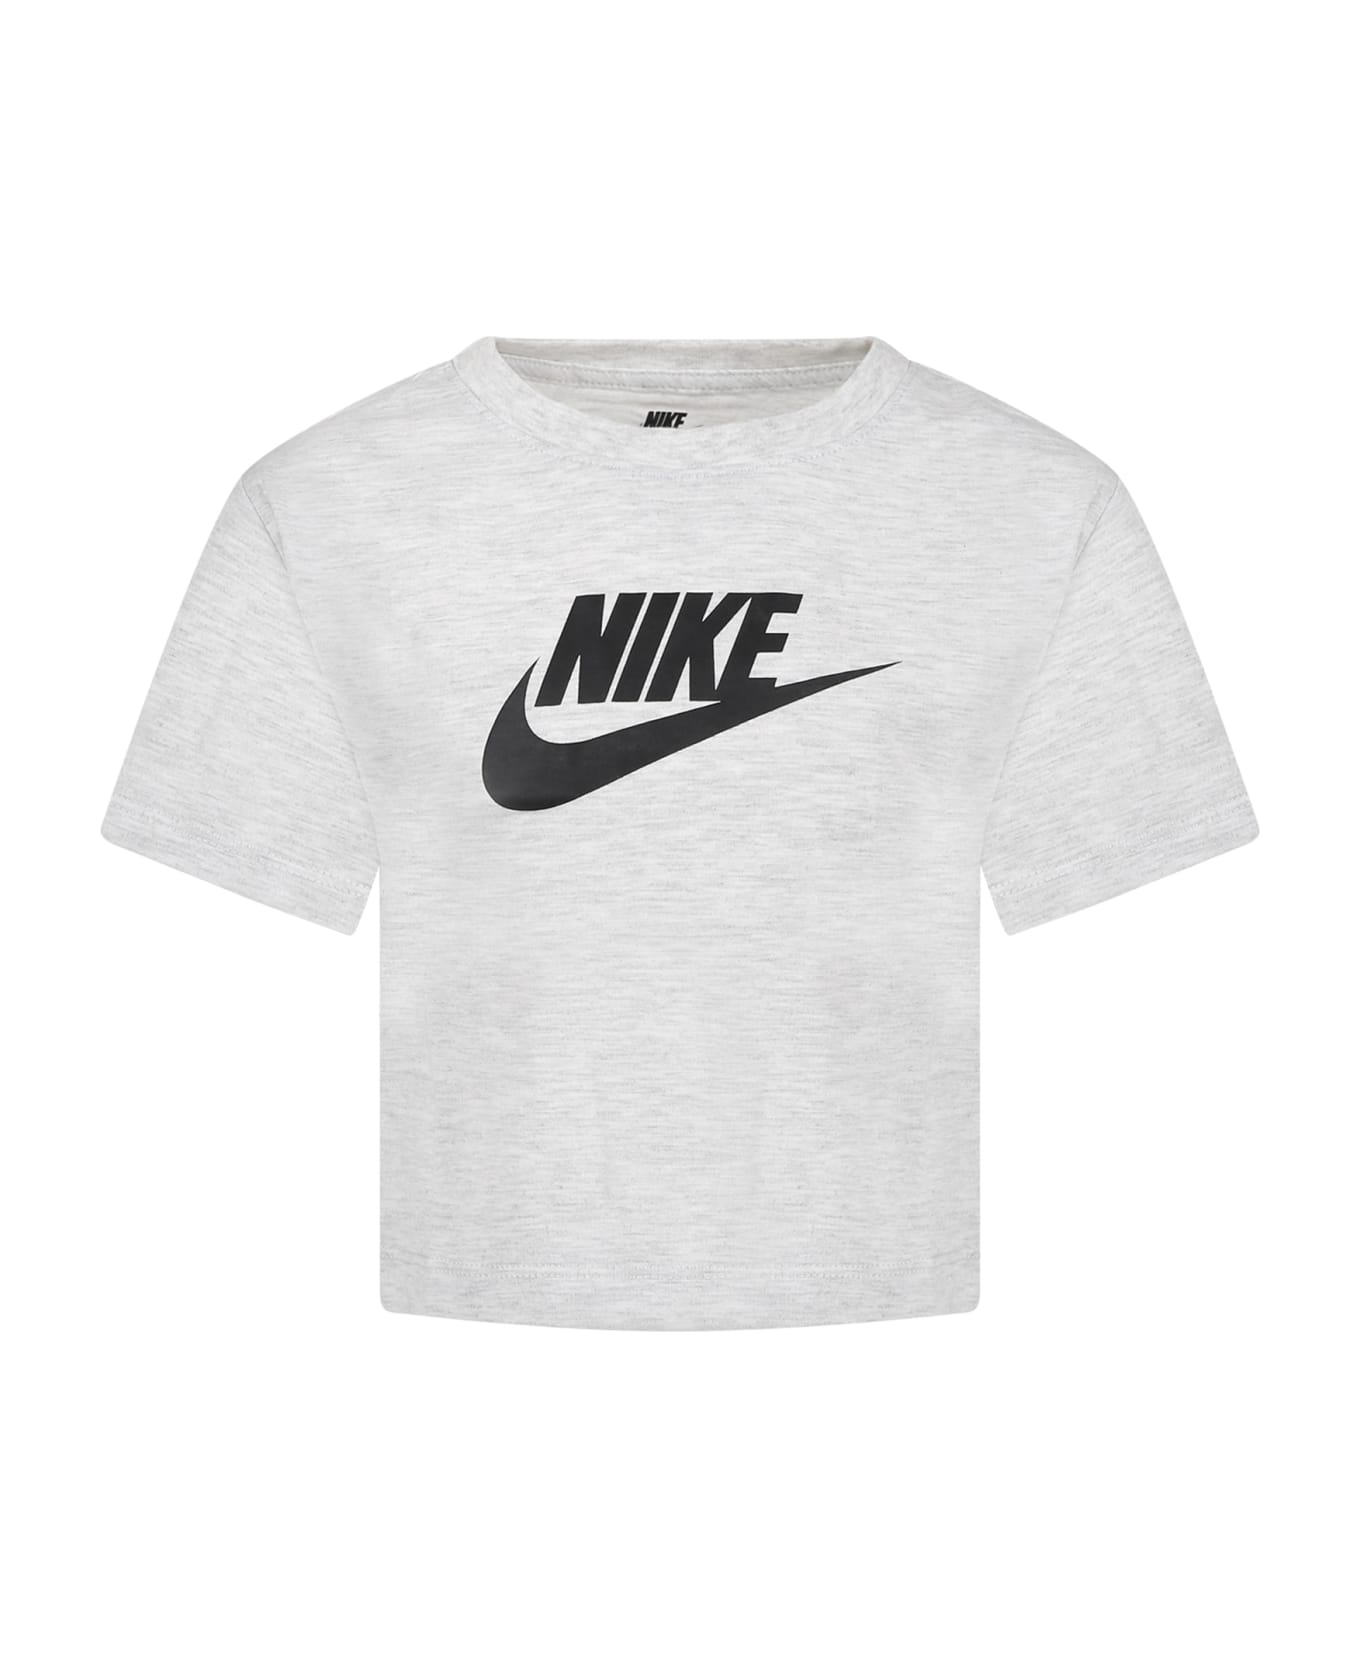 Nike Grey T-shirt Fot Girl With Logo - Grey